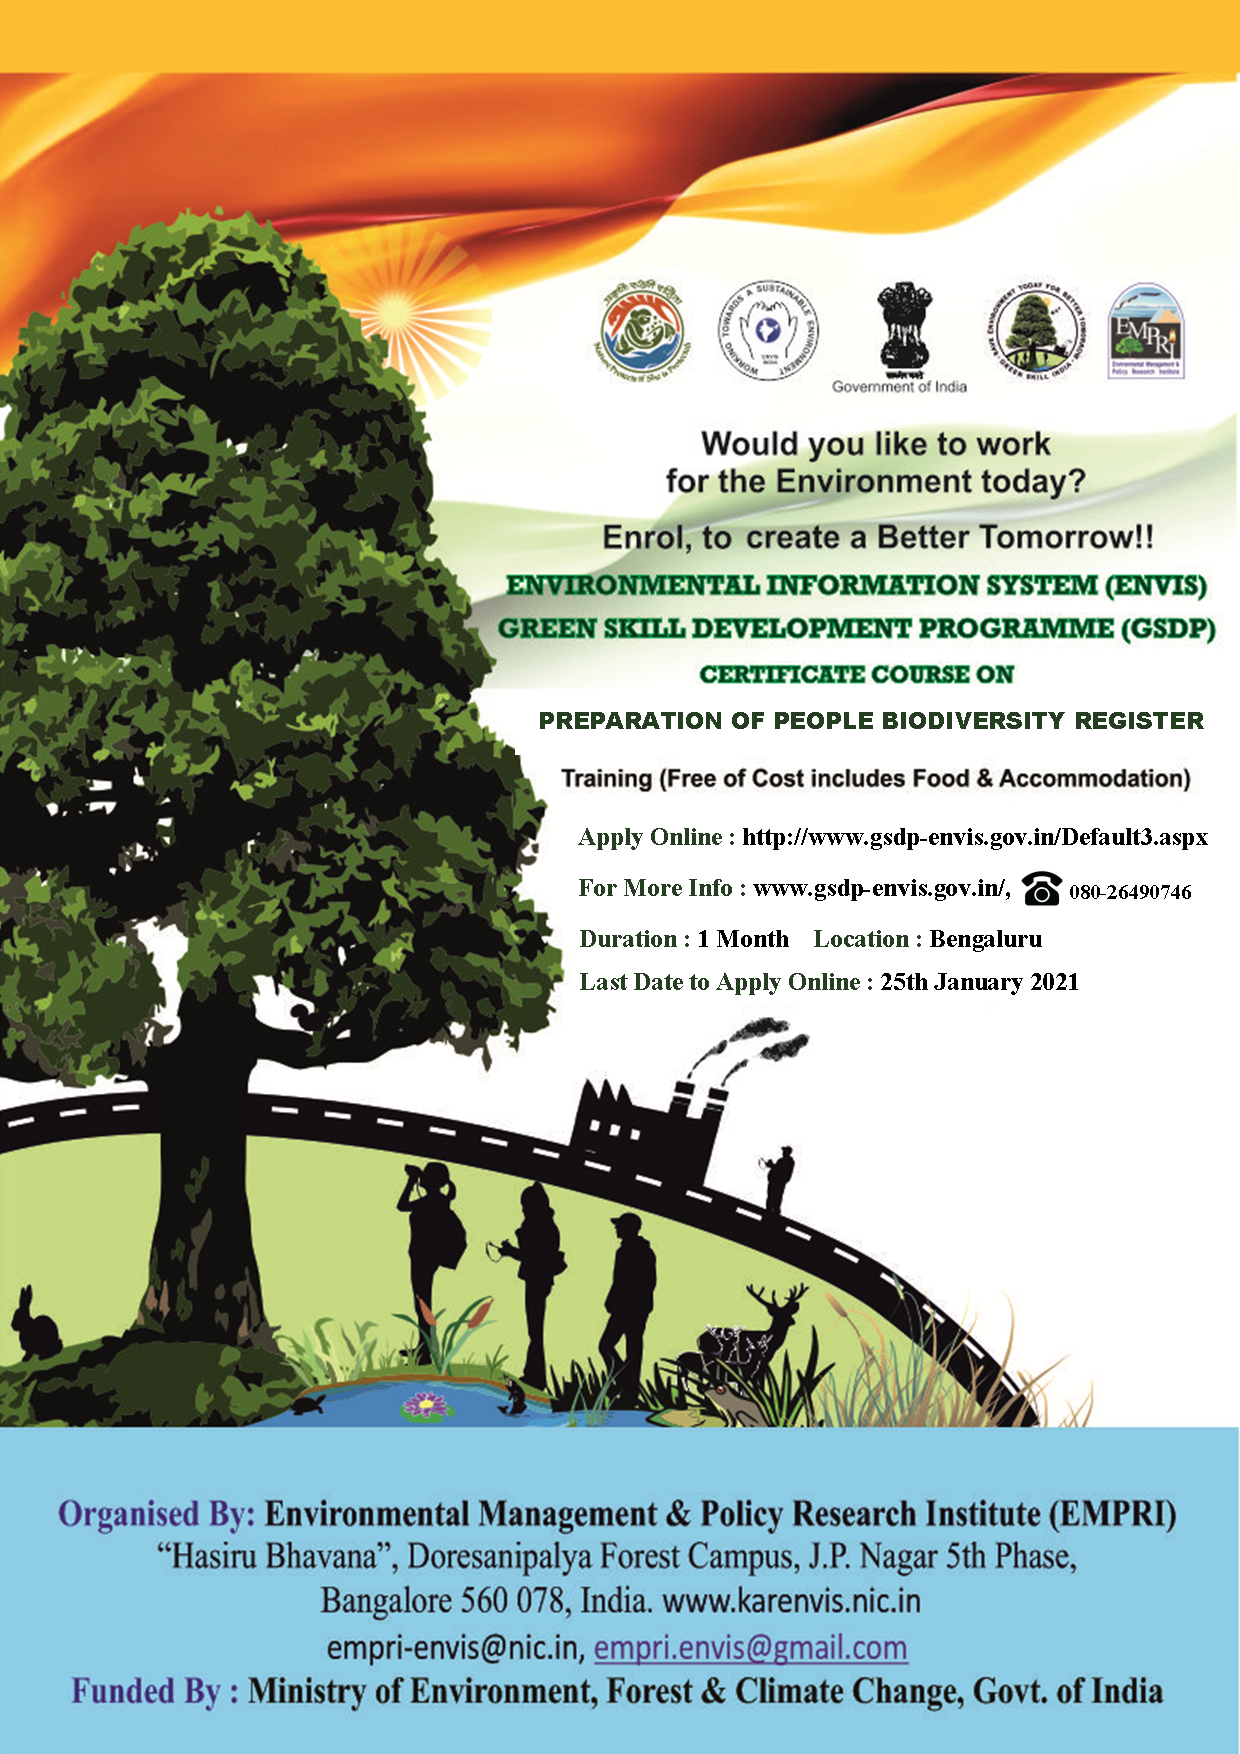 Green Skill Development Programme on Preparation of People Biodiversity Register